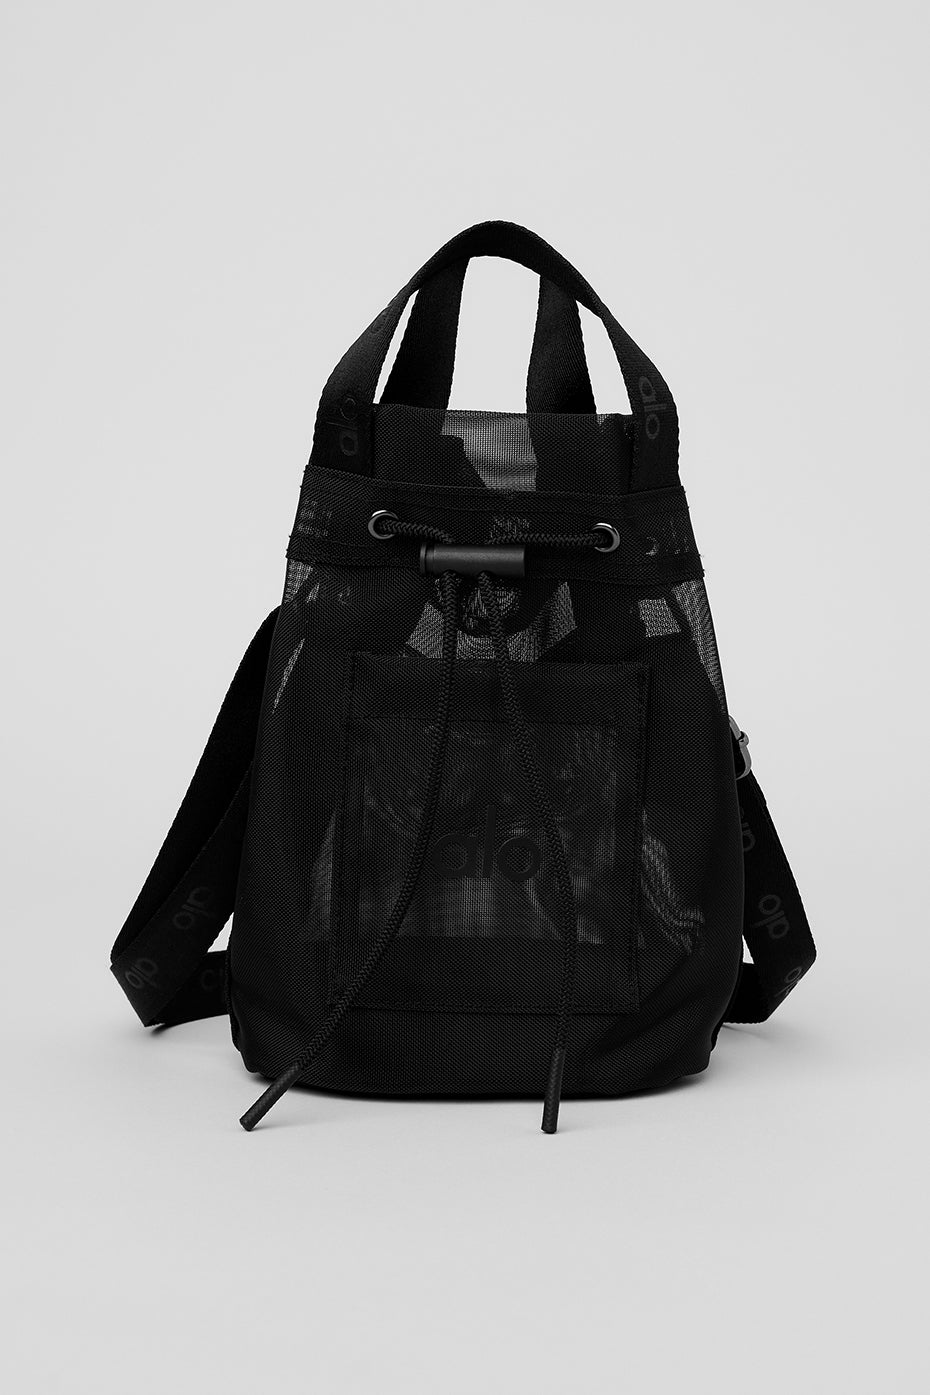 Cross Body Bucket Bag - Espresso/Black - Espresso/Black / One Size